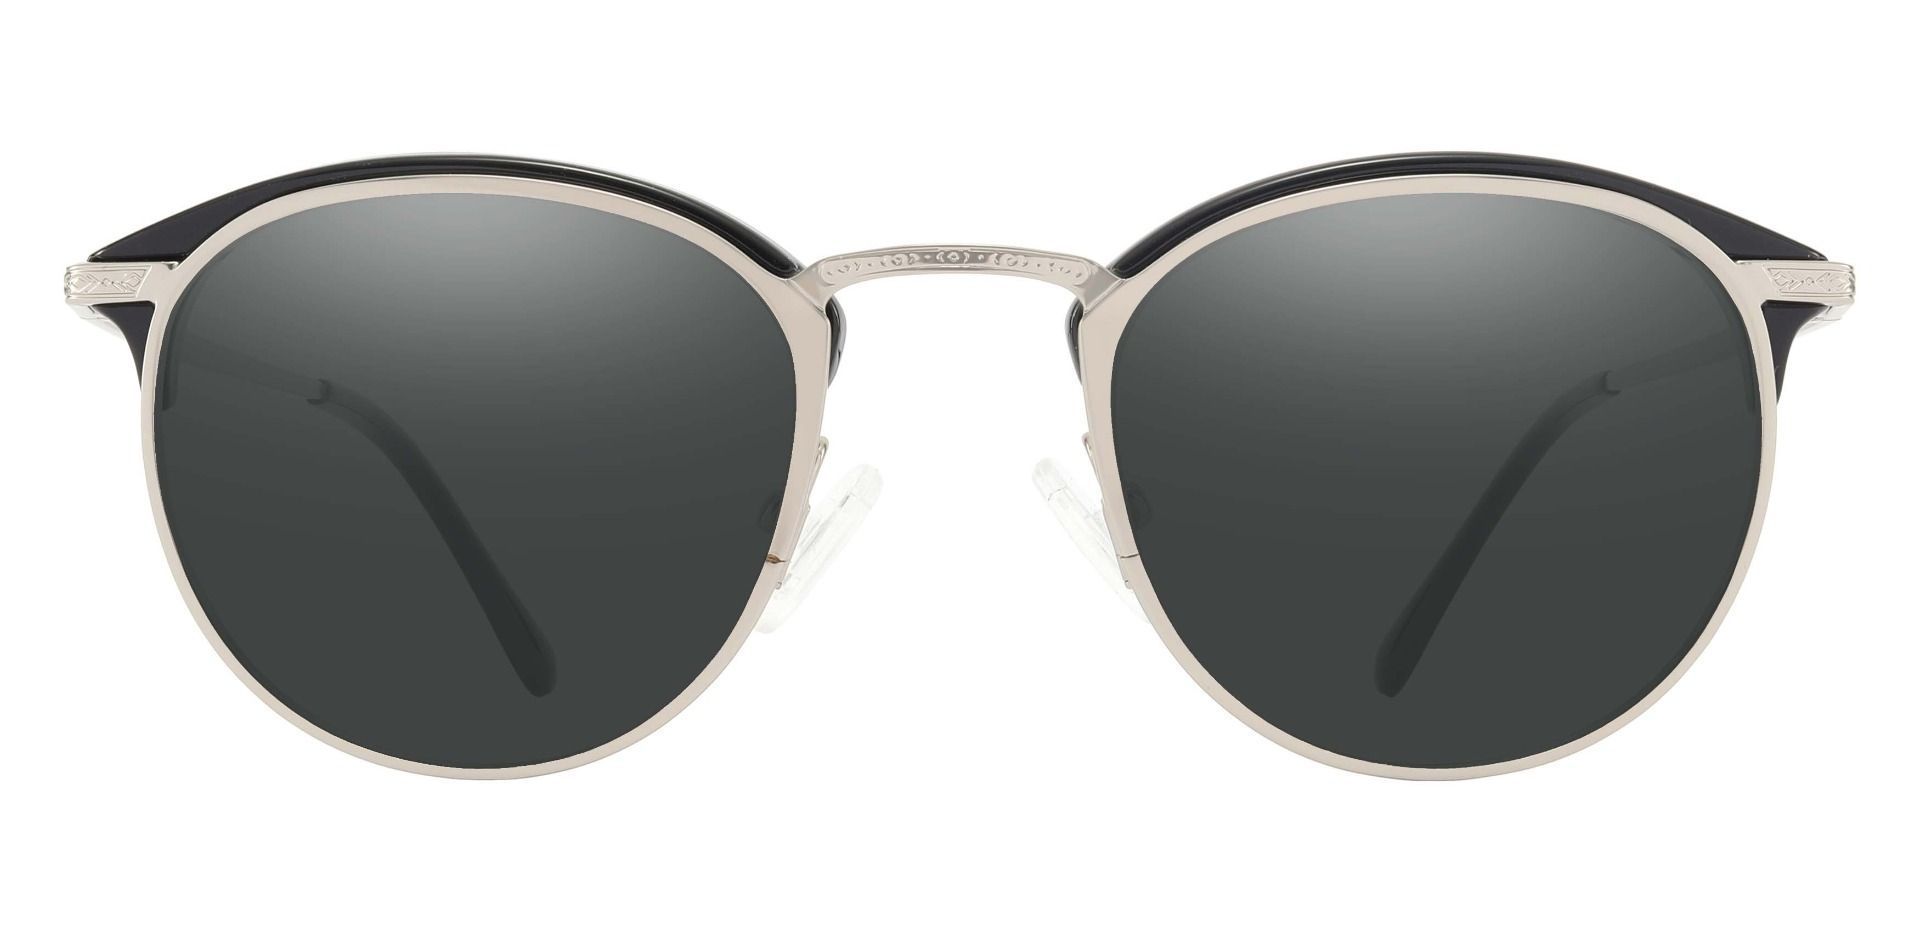 Shultz Browline Prescription Sunglasses - Silver Frame With Gray Lenses